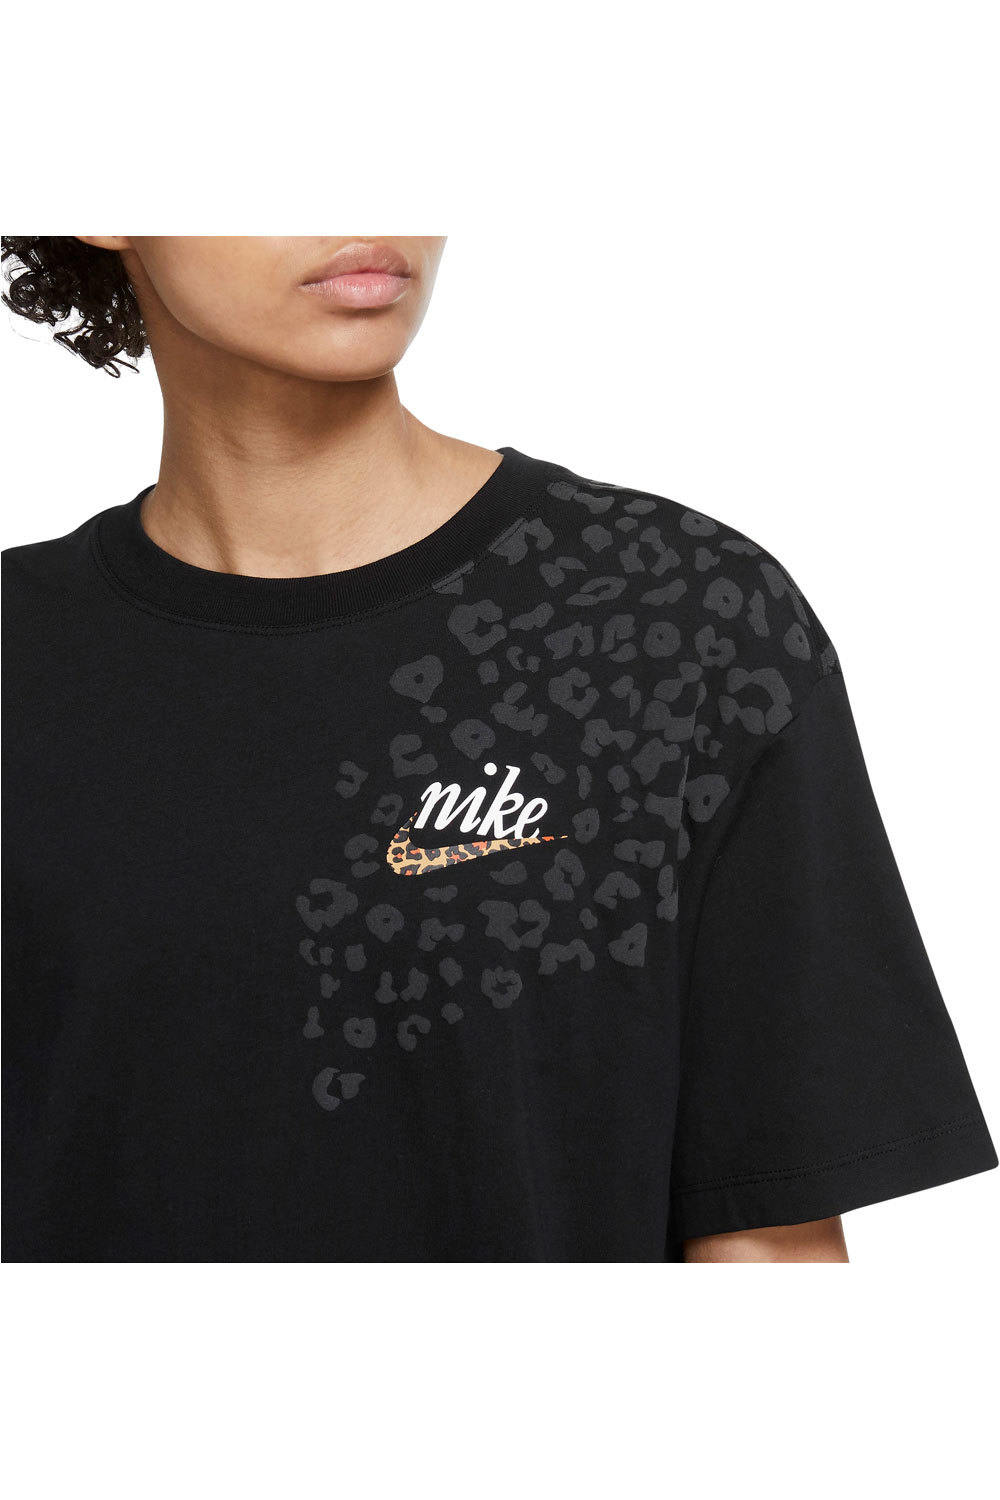 Nike camiseta manga corta mujer W NSW TEE BF PATCH vista detalle